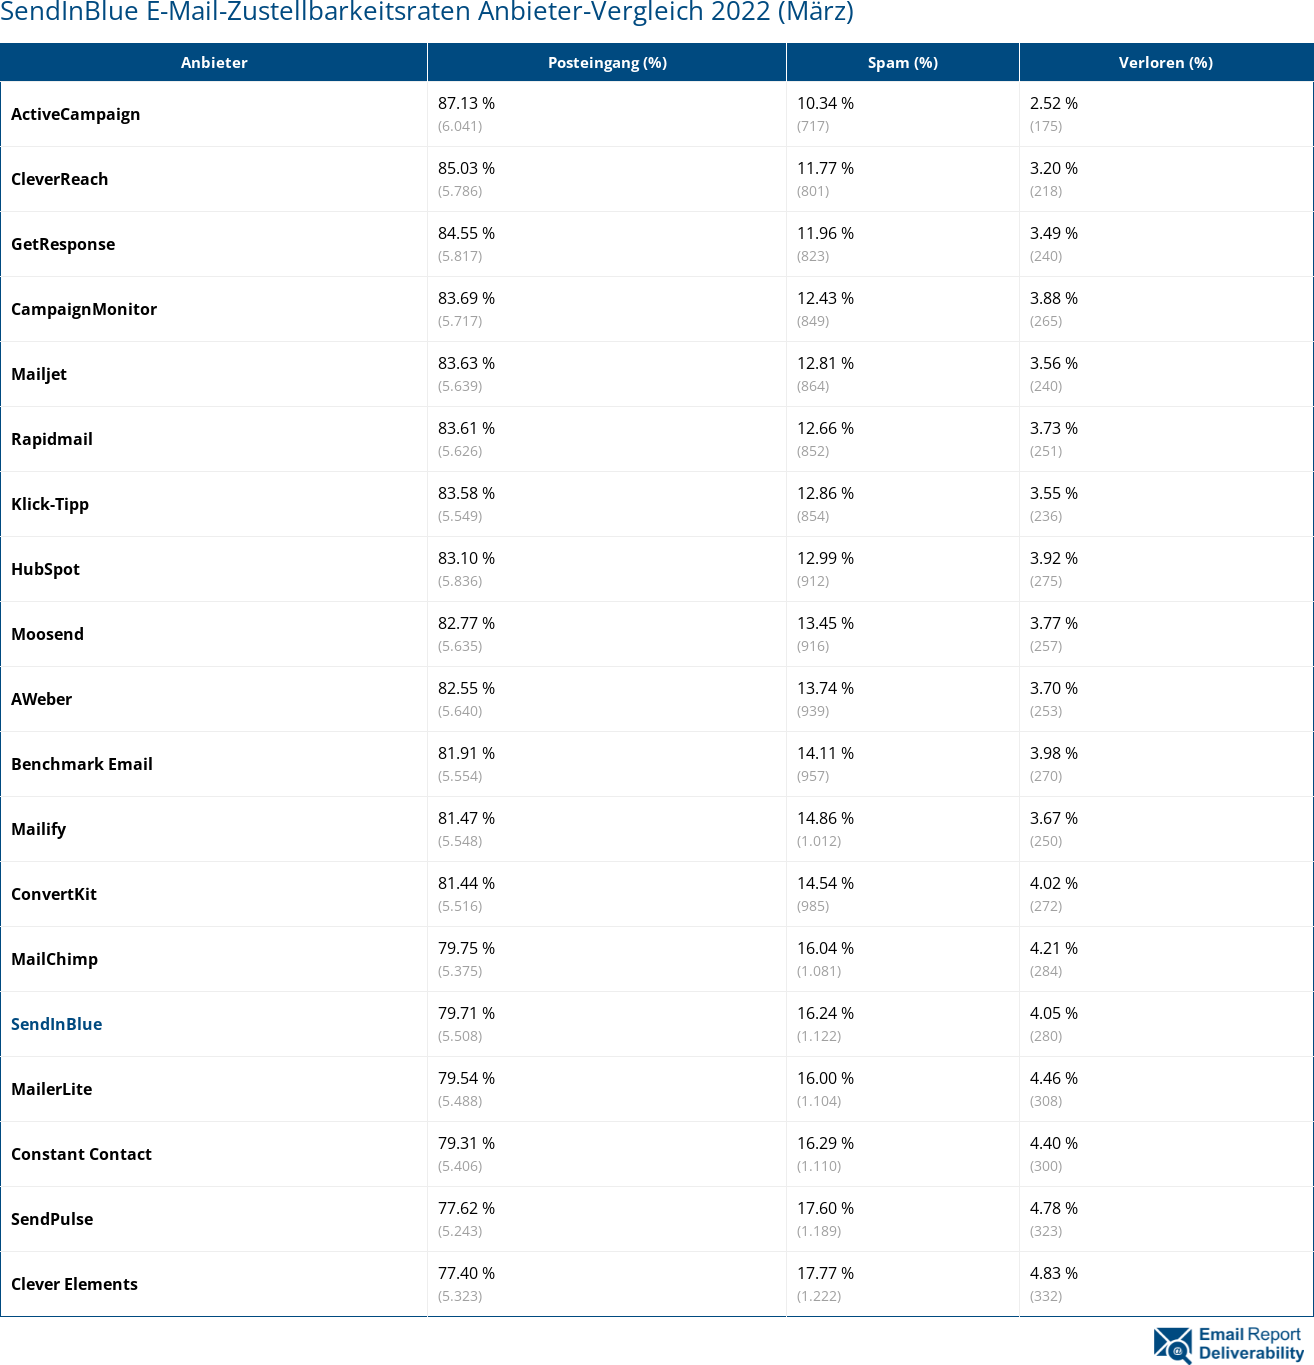 SendInBlue E-Mail-Zustellbarkeitsraten Anbieter-Vergleich 2022 (März)